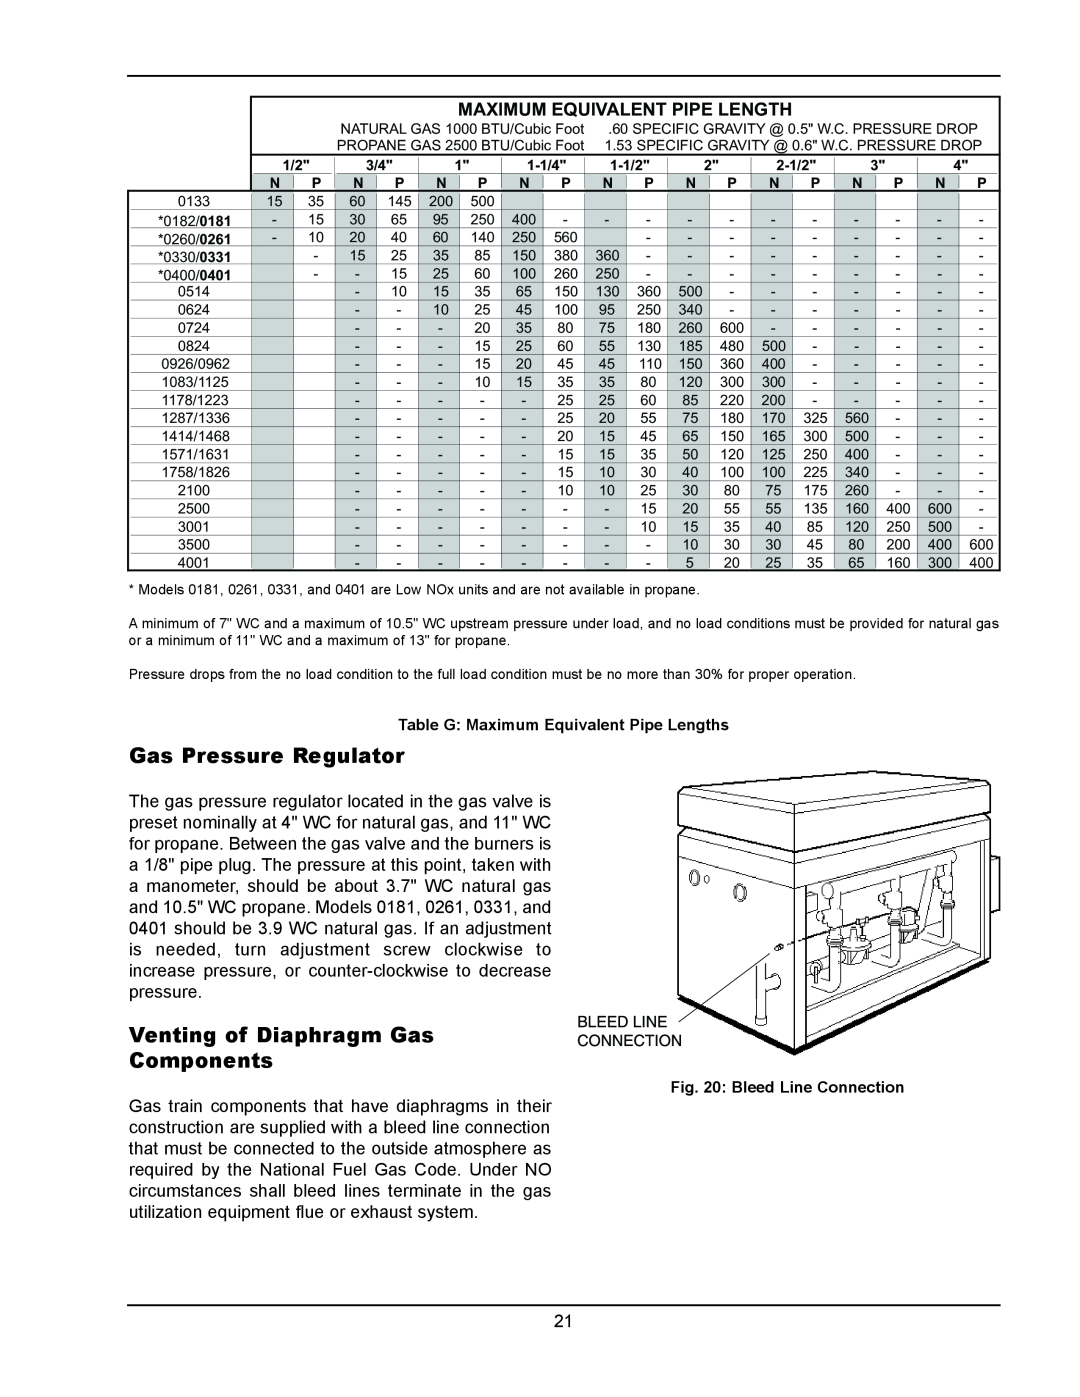 Raypak 1334001 Gas Pressure Regulator, Venting of Diaphragm Gas Components, Maximum Equivalent Pipe Length 